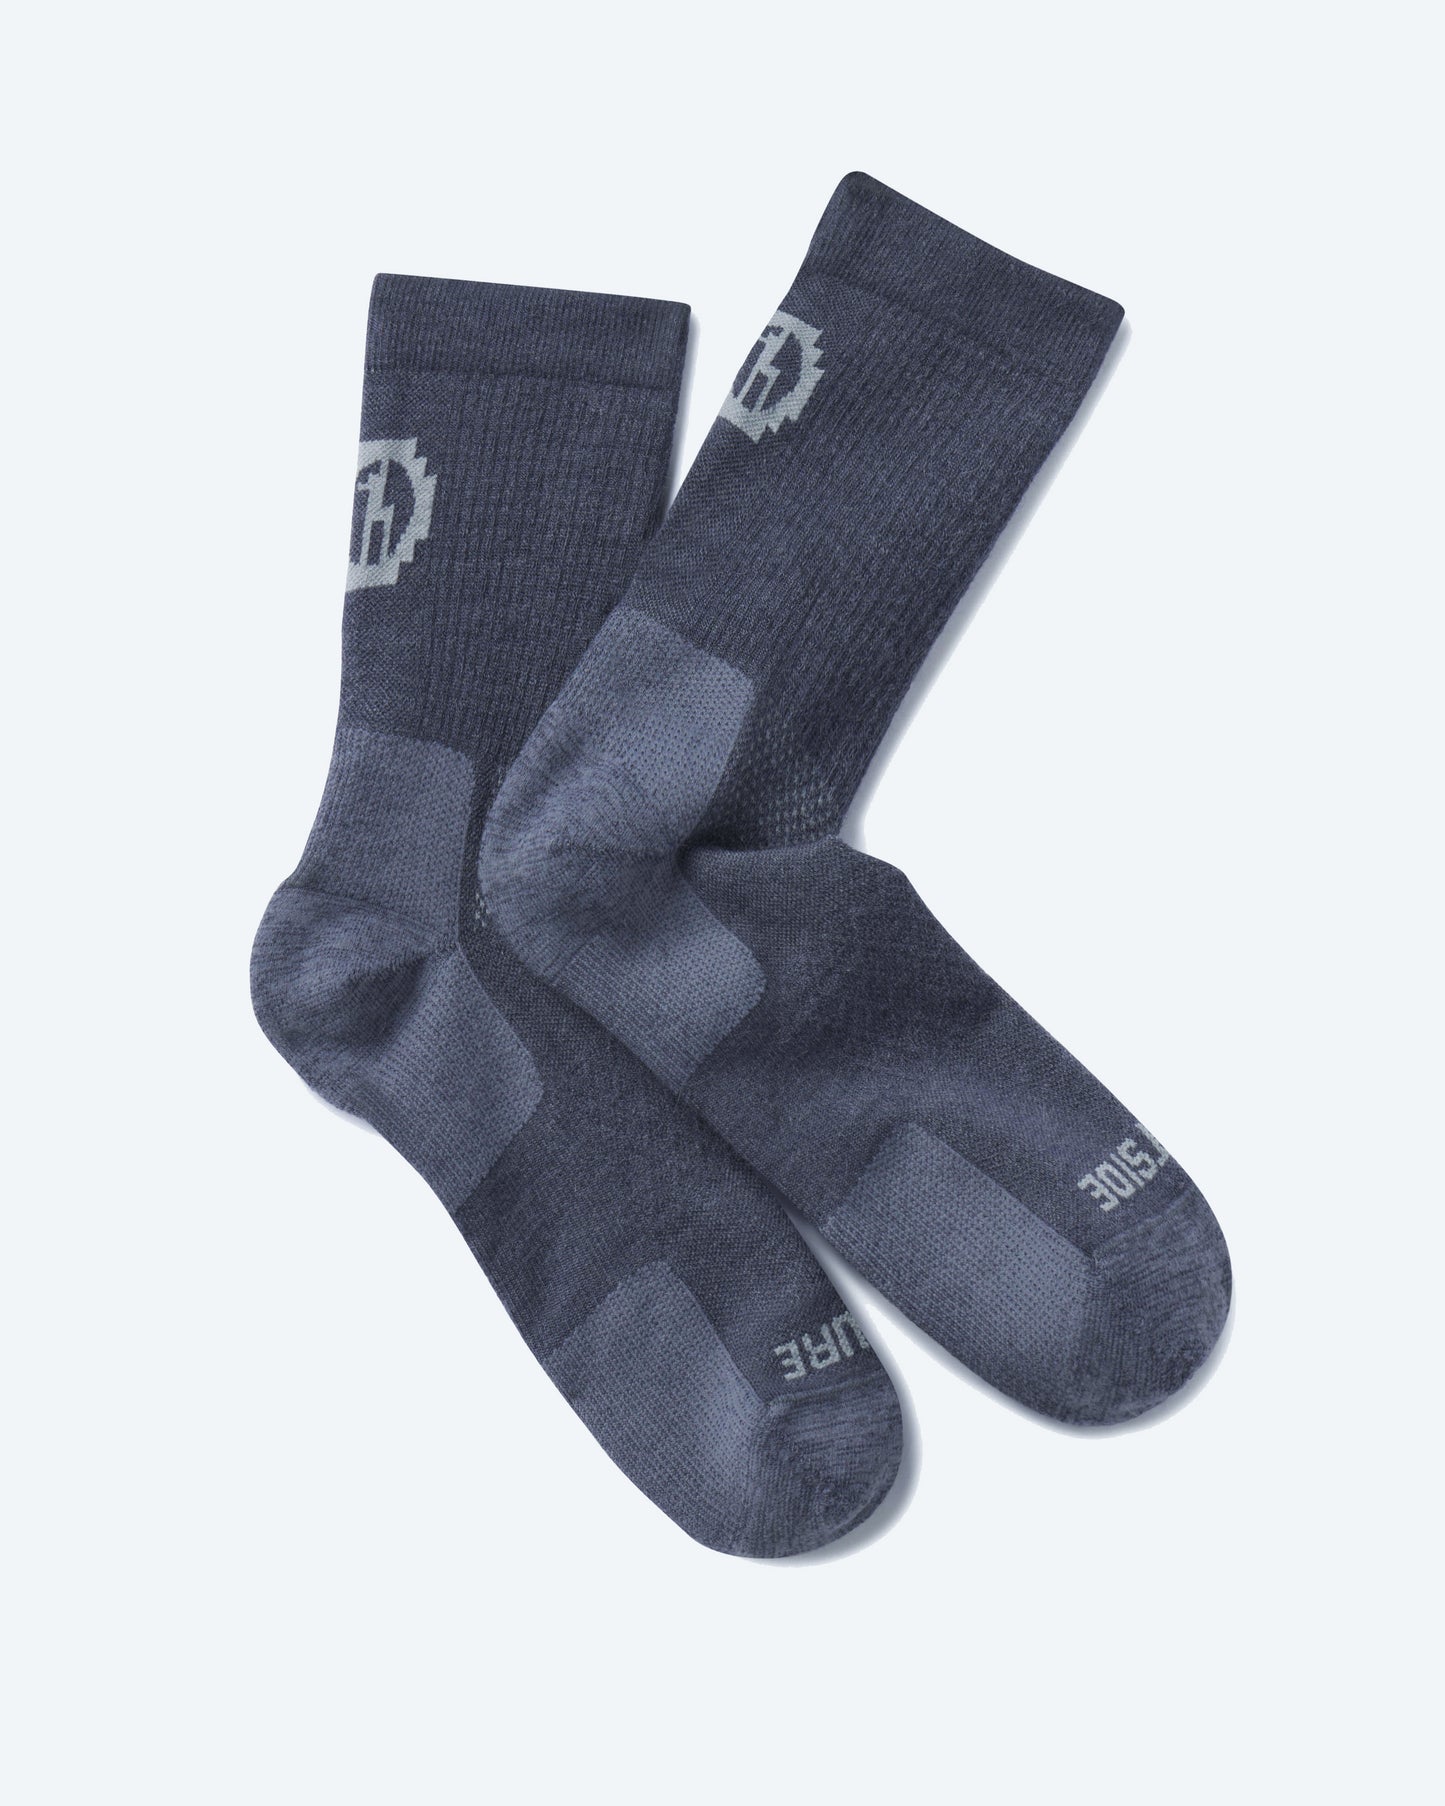 Men's Half-Terry Crew-Length Socks [3 Pairs]